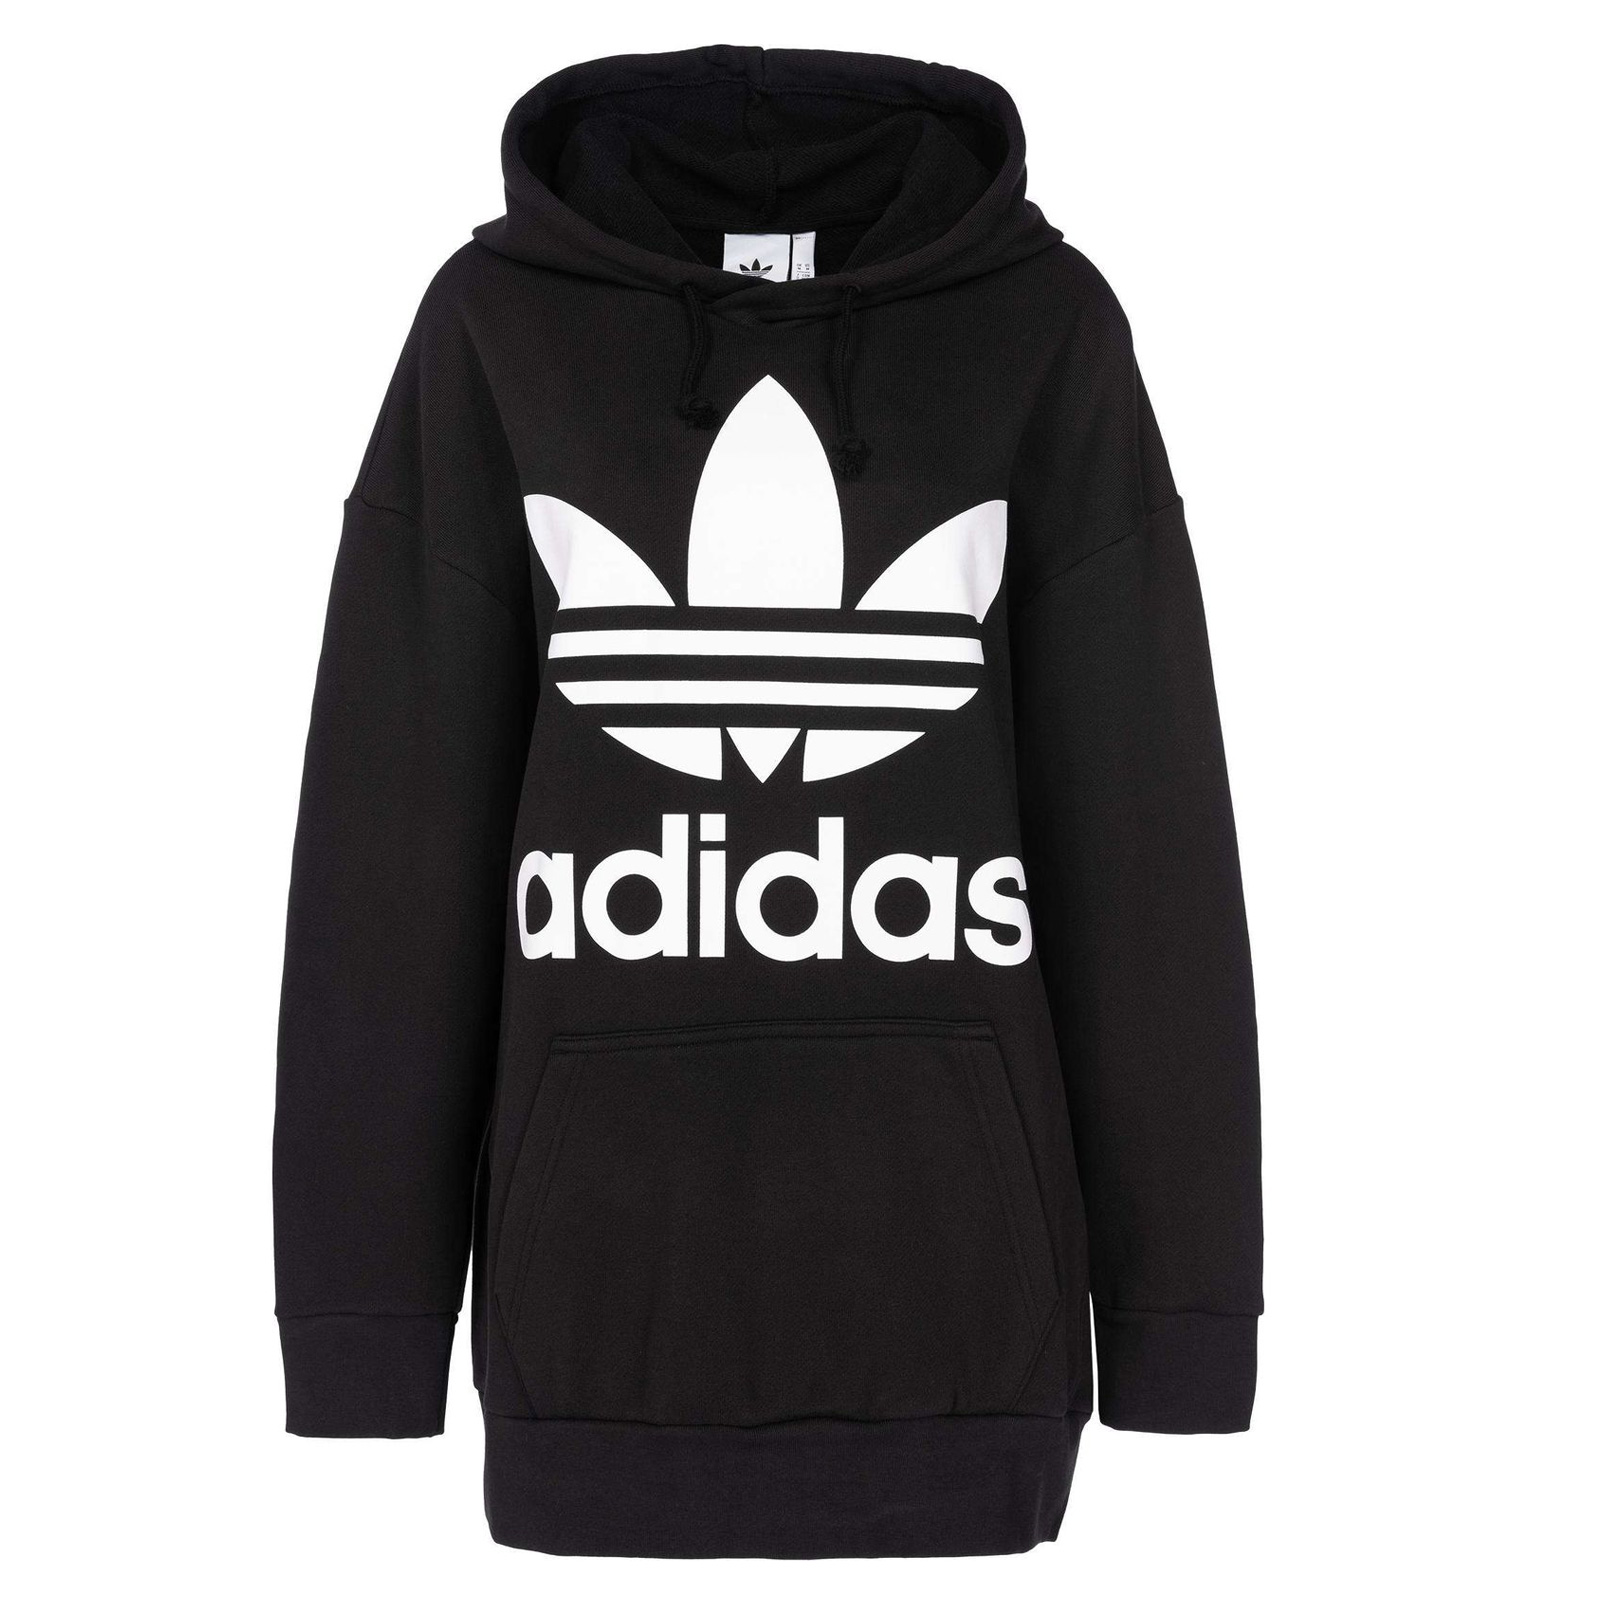 Adidas Originals Oversized Hoodie Huge Trefoil Men's Hooded Sweatshirt Black  | eBay